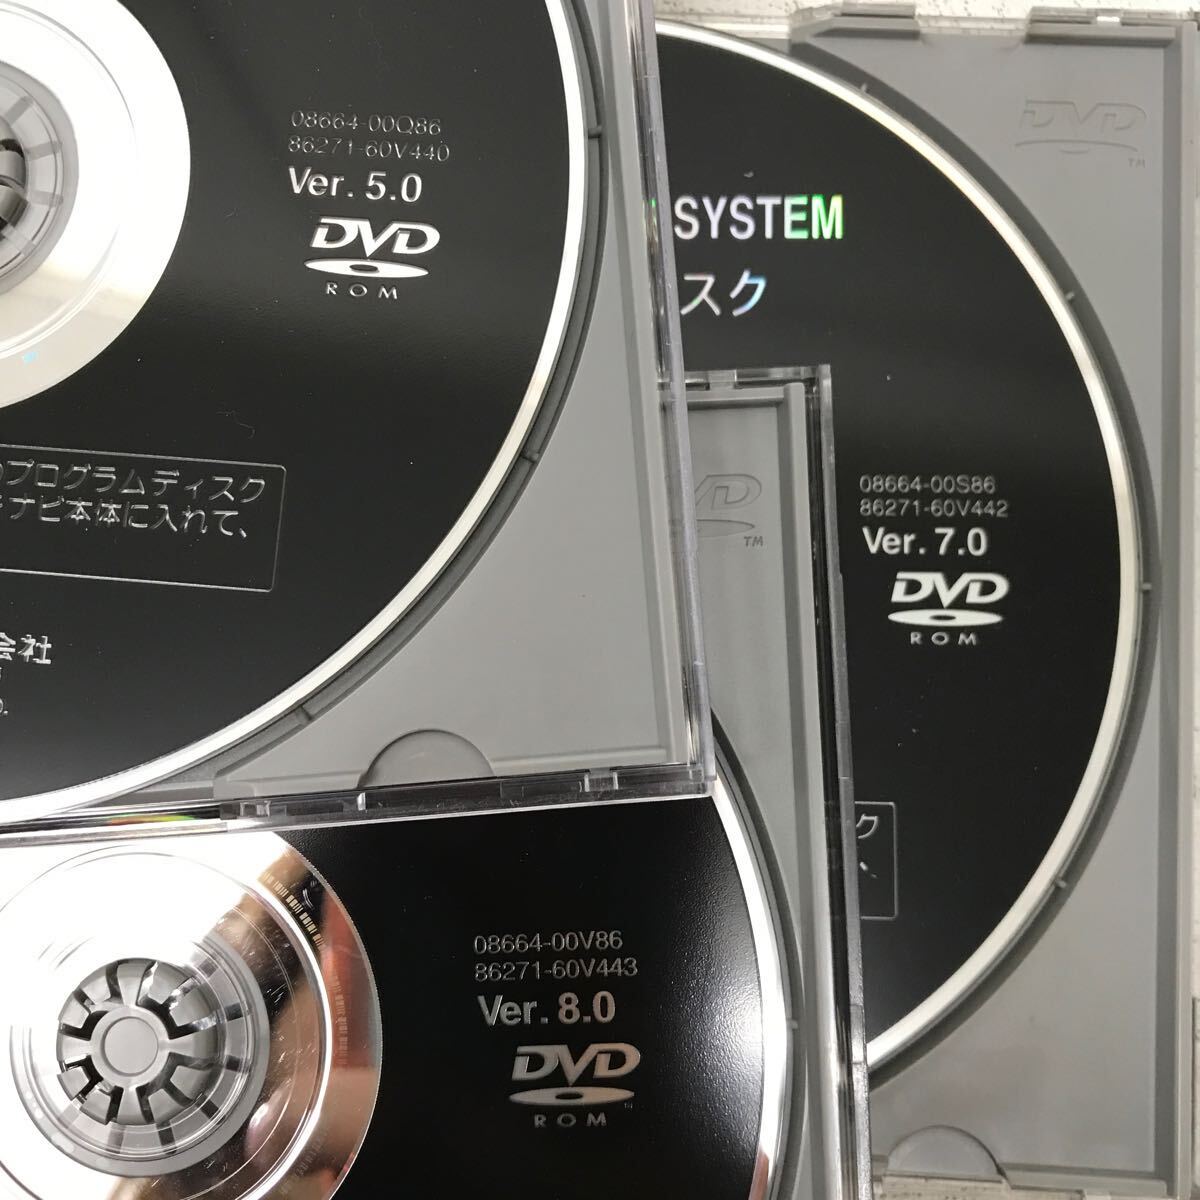 I0320I3 まとめ★トヨタ自動車 プログラムディスク VOICE NAVIGATION DVD-ROM 9巻セット ボイスナビゲーションシステム _画像3